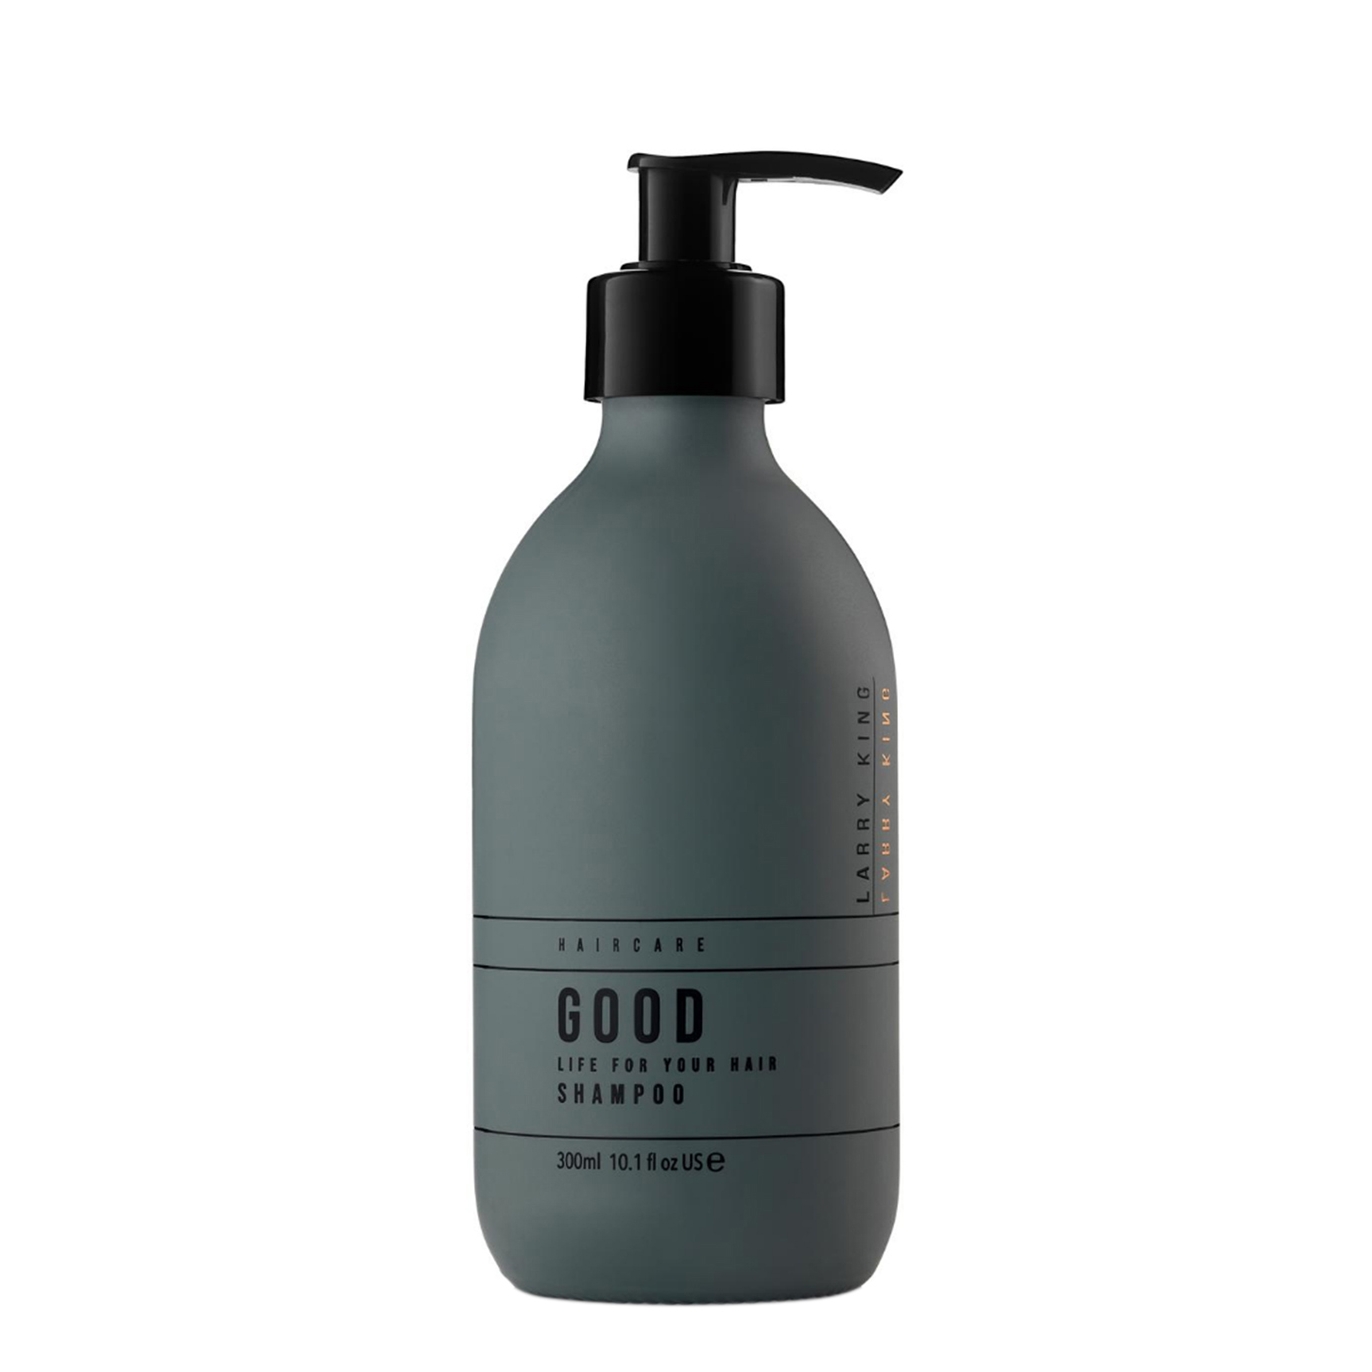 Larry King Good Life Shampoo Bottle 300ml